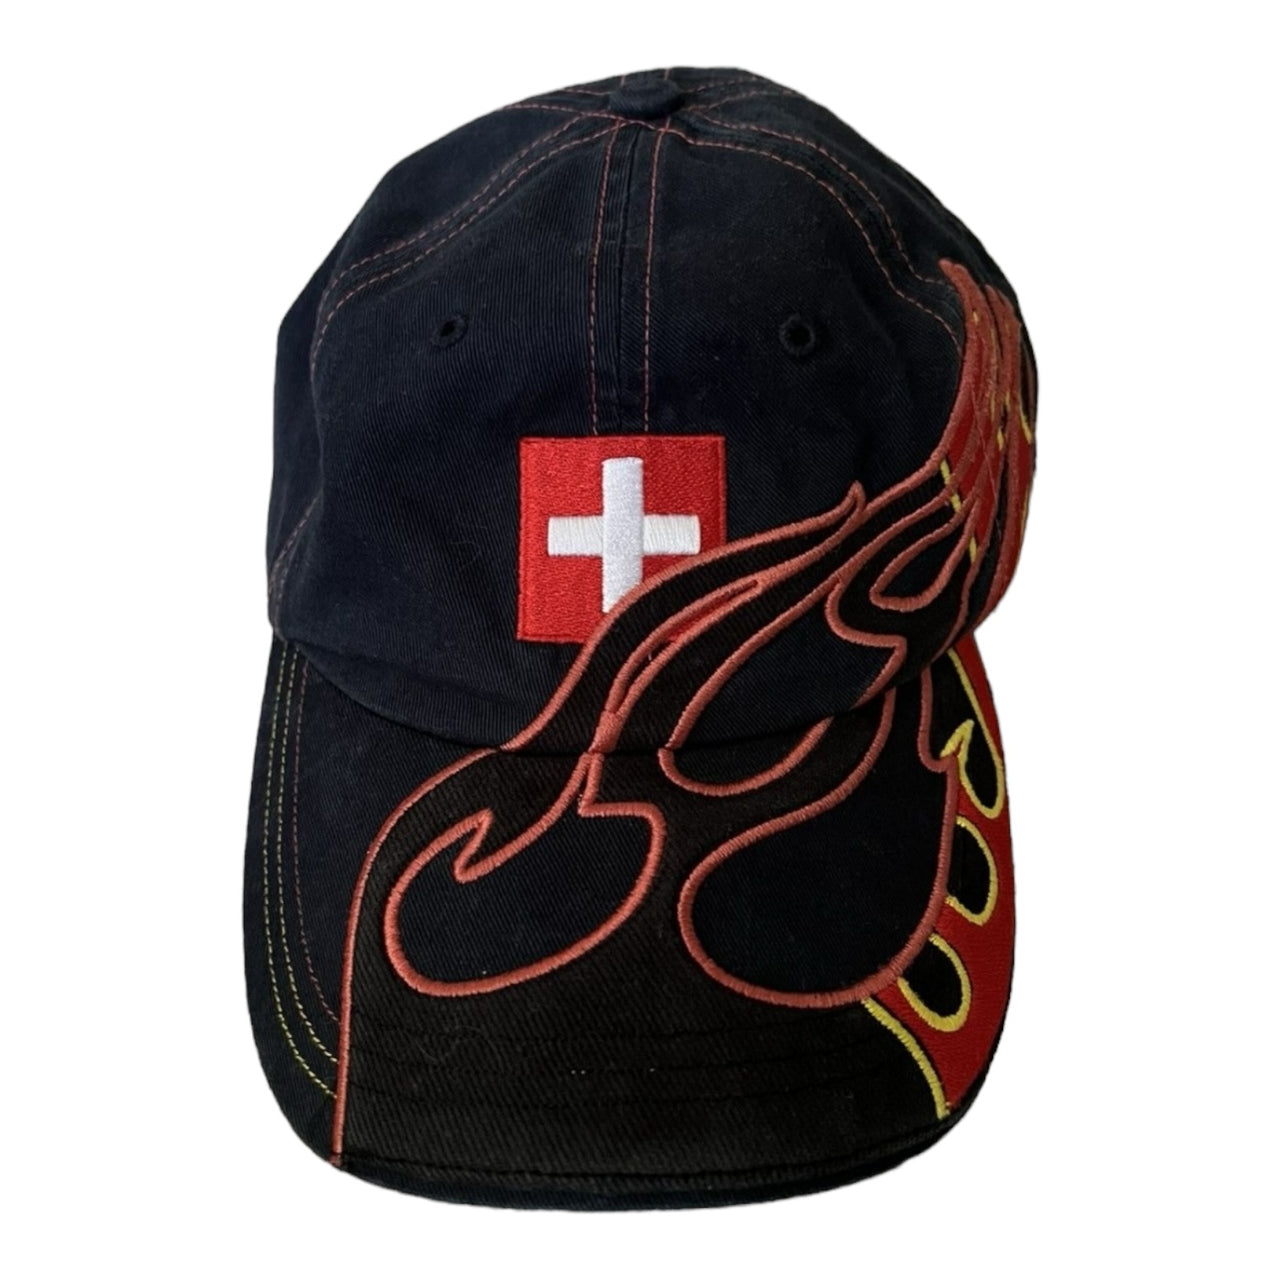 Vetements x Rebook Swiss Flame Hat